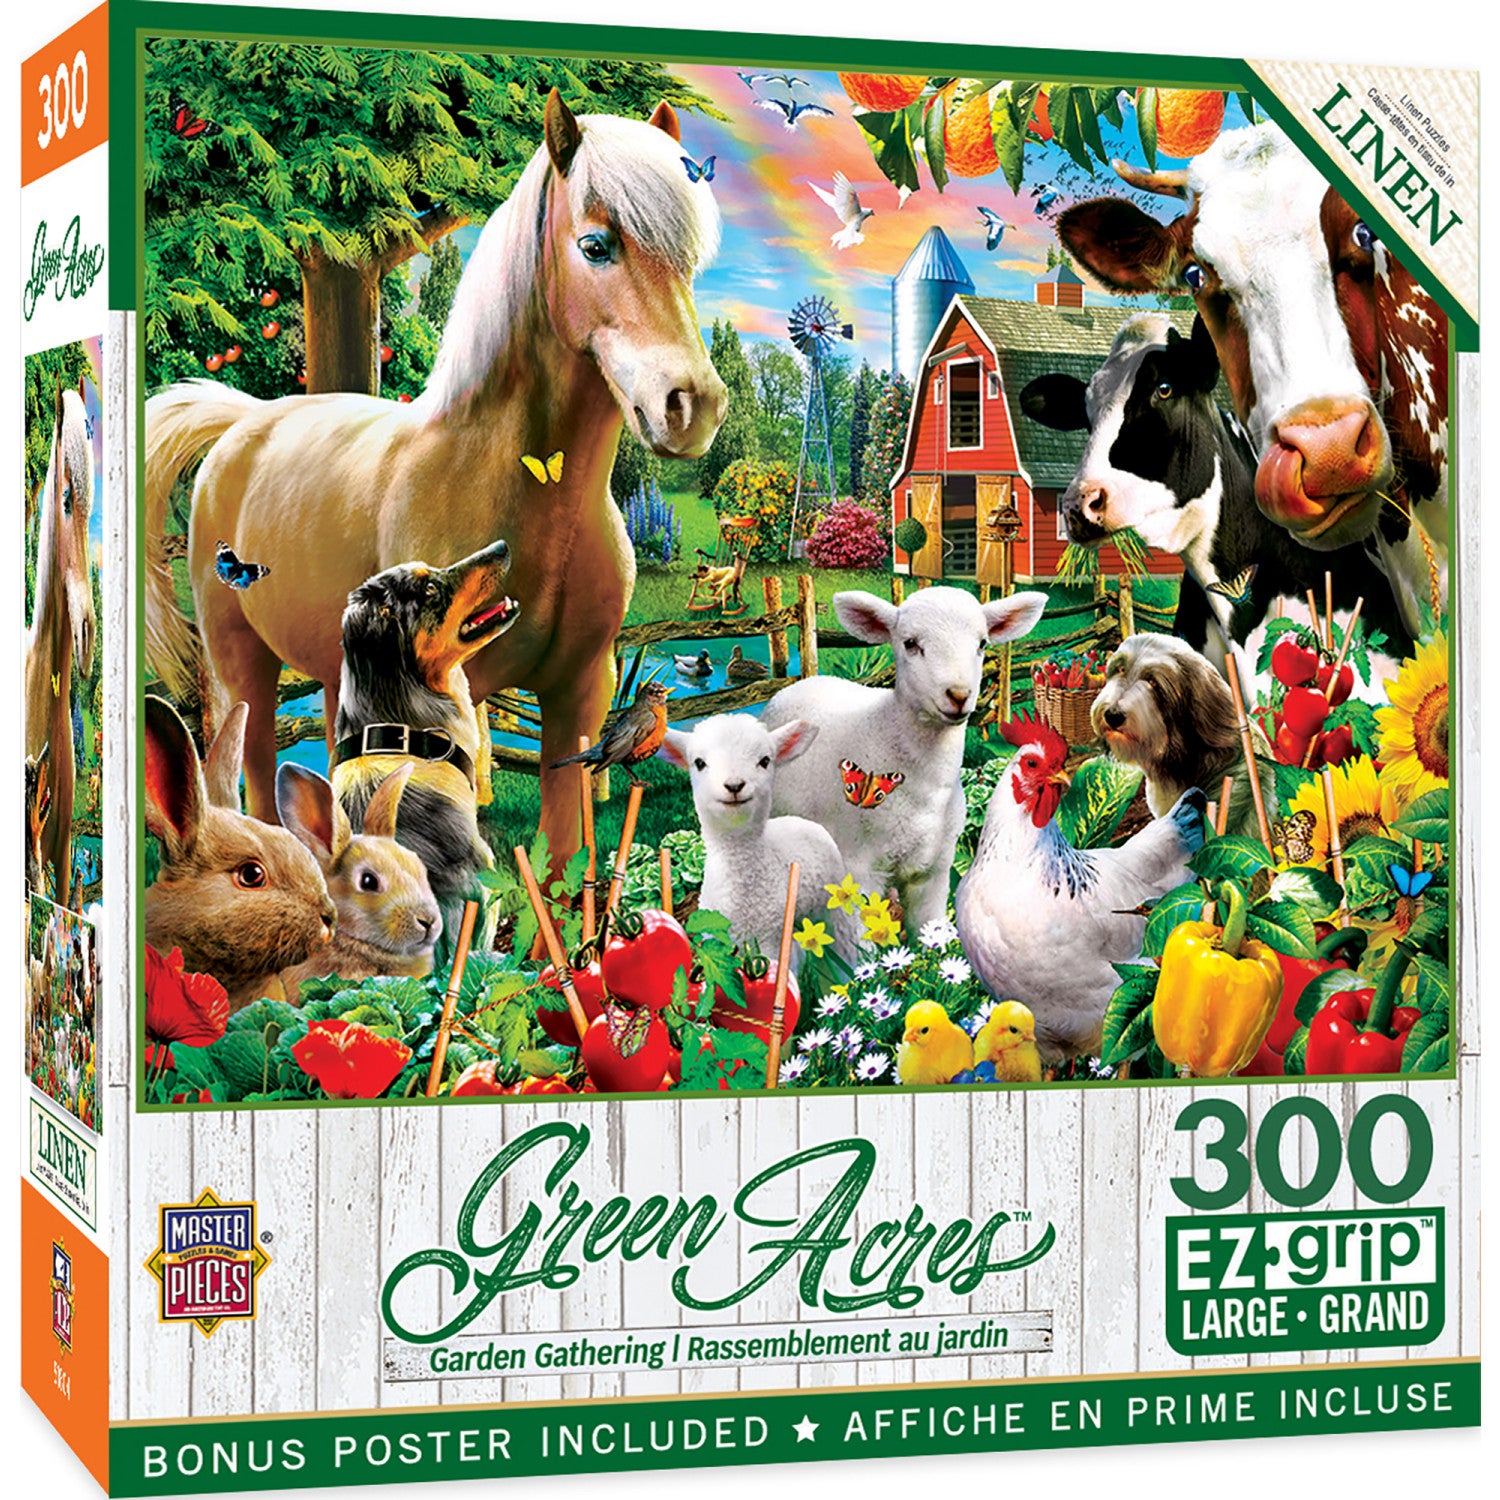 Green Acres - Garden Gathering 300 Piece EZ Grip Jigsaw Puzzle